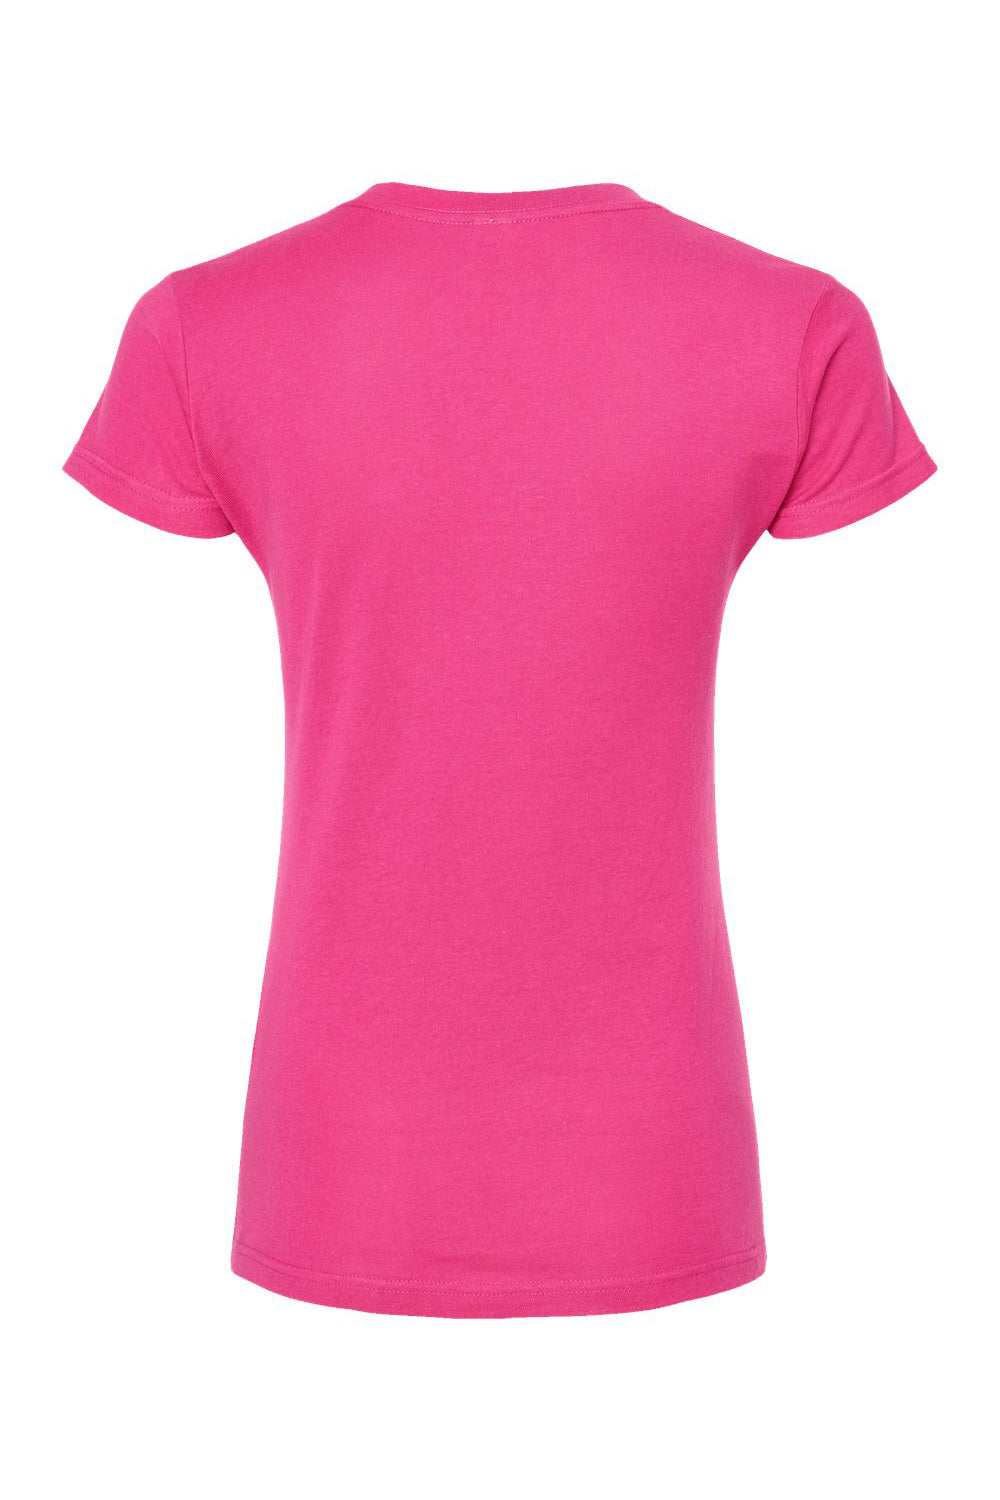 Tultex 214 Womens Fine Jersey Short Sleeve V-Neck T-Shirt Fuchsia Pink Flat Back